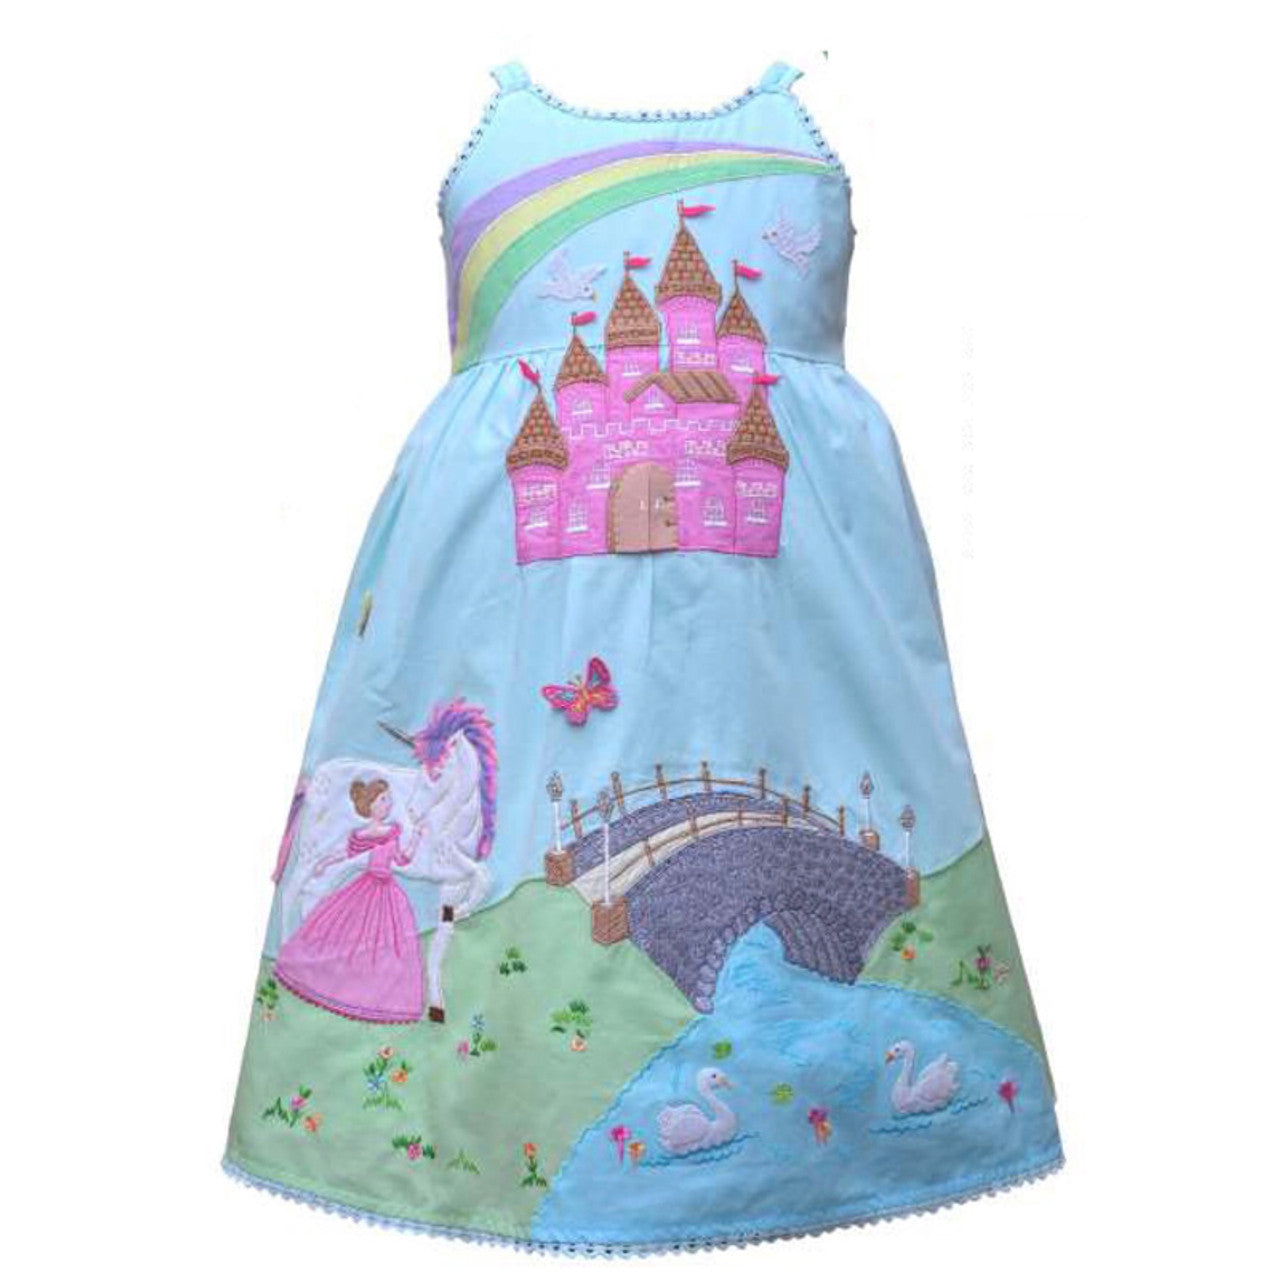 Embroidered Fairyland Unicorn Dress